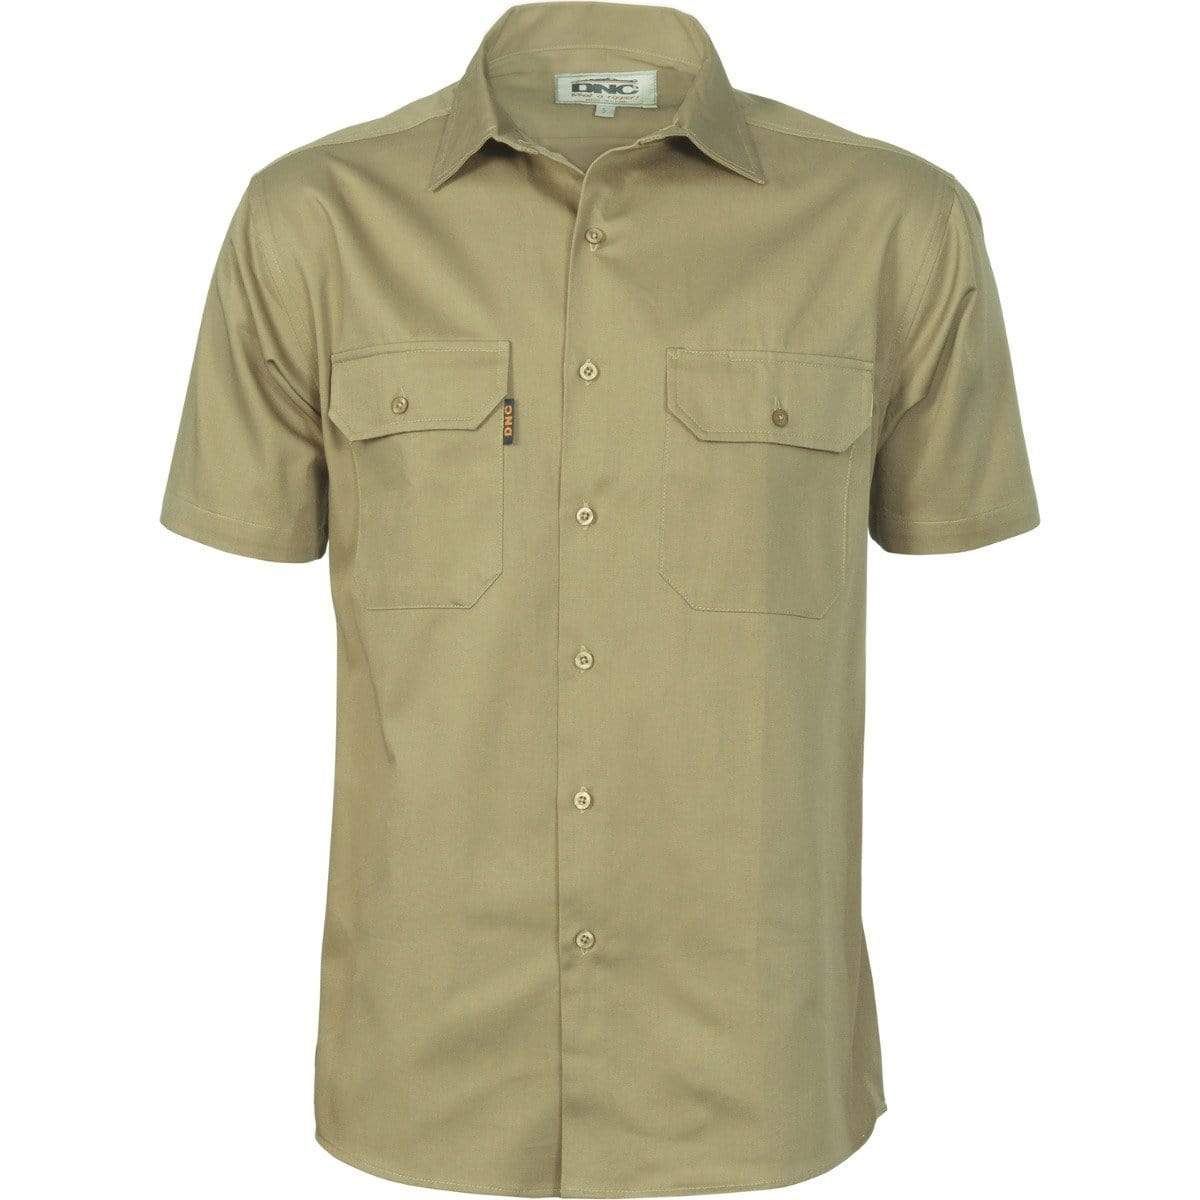 Dnc Workwear Cool-breeze Short Sleeve Work Shirt - 3207 Work Wear DNC Workwear Khaki S 